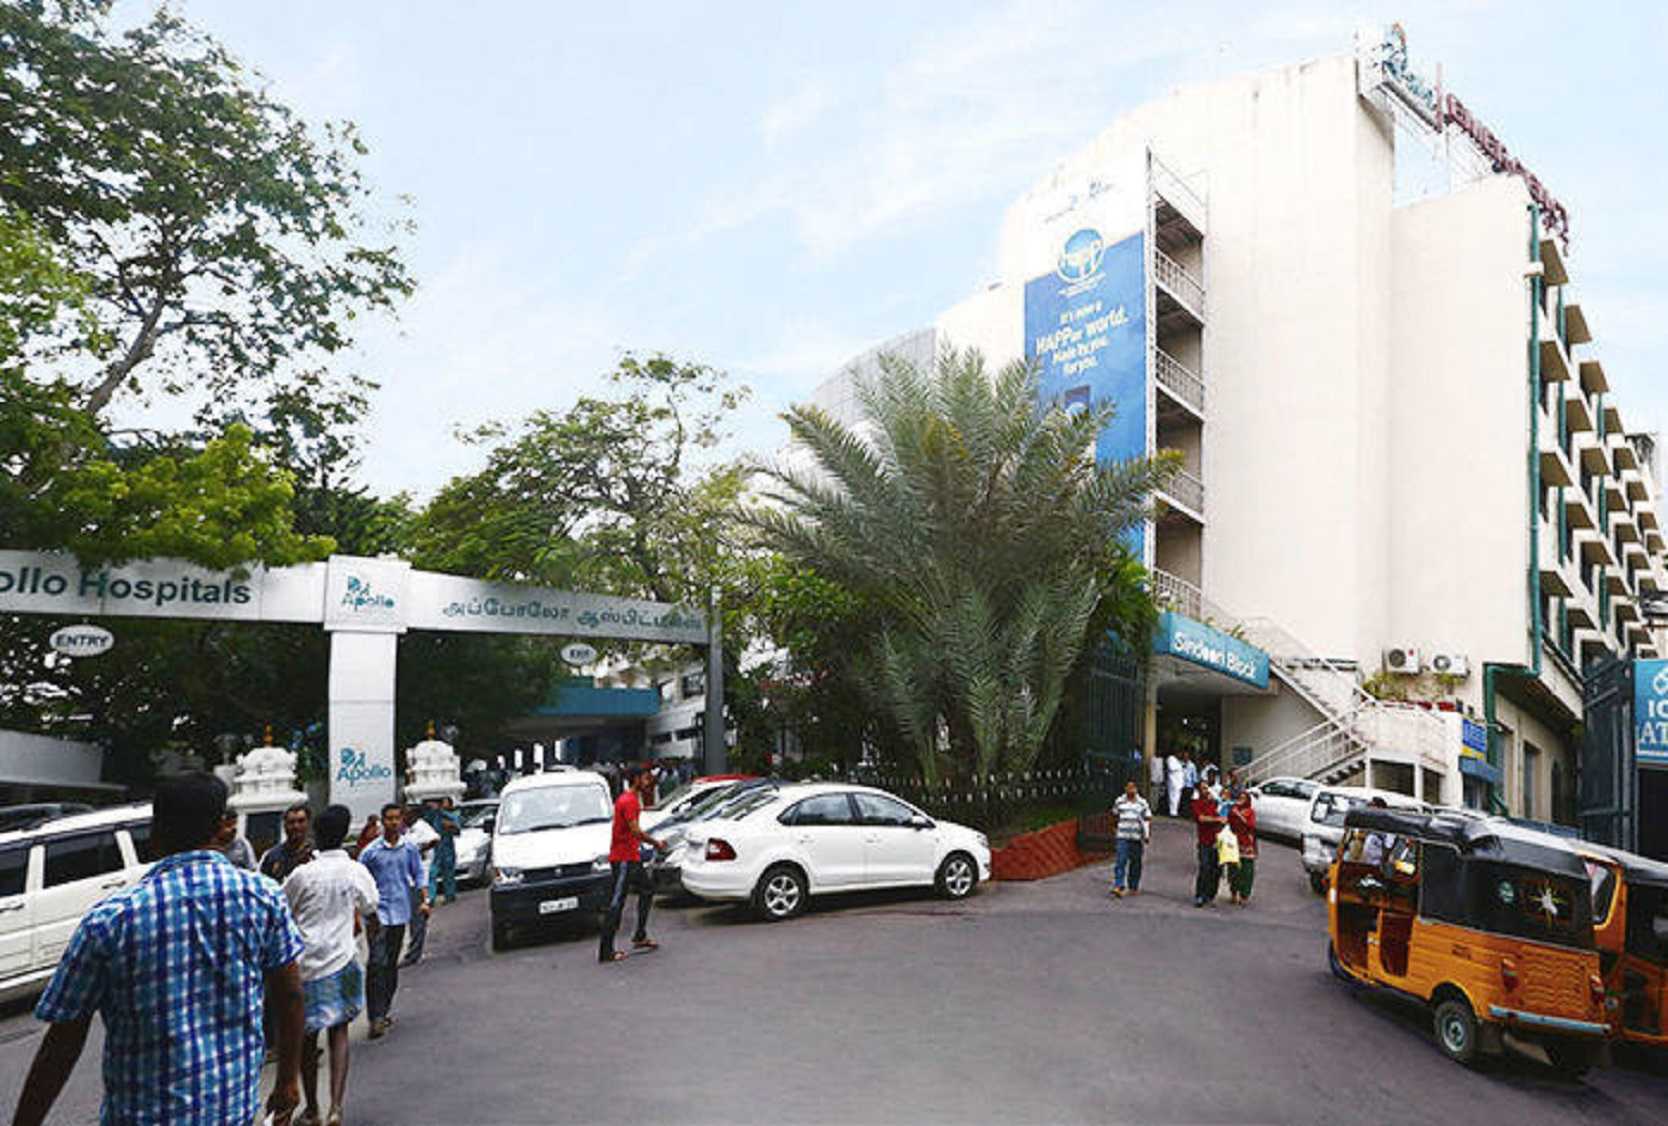 Apollo Hospital Greams Road Chennai